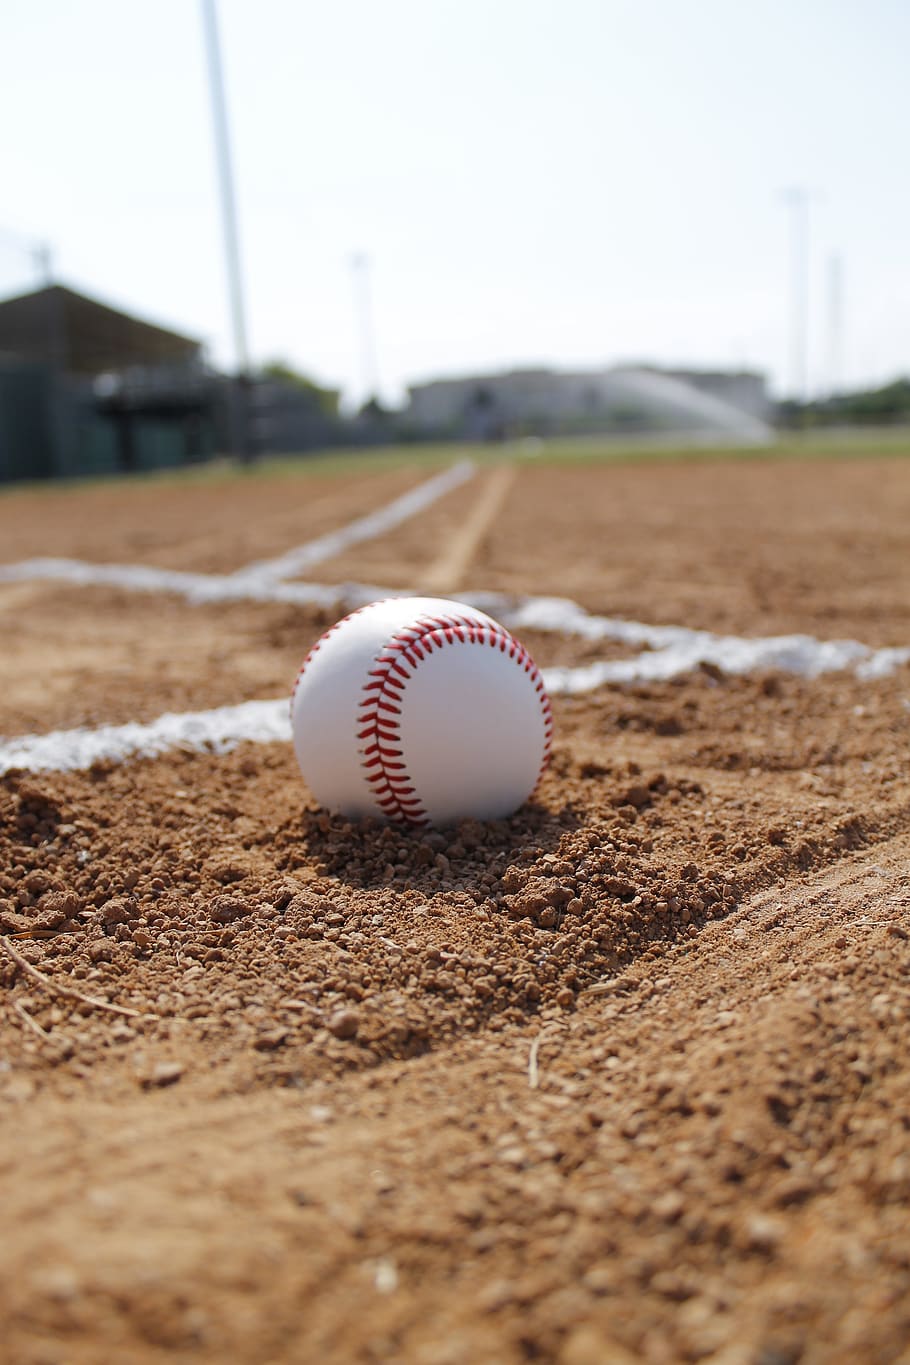 baseball, kerikil, olahraga, permainan, baseball - olahraga, baseball - bola, bola, hari, lapangan bermain, tanah